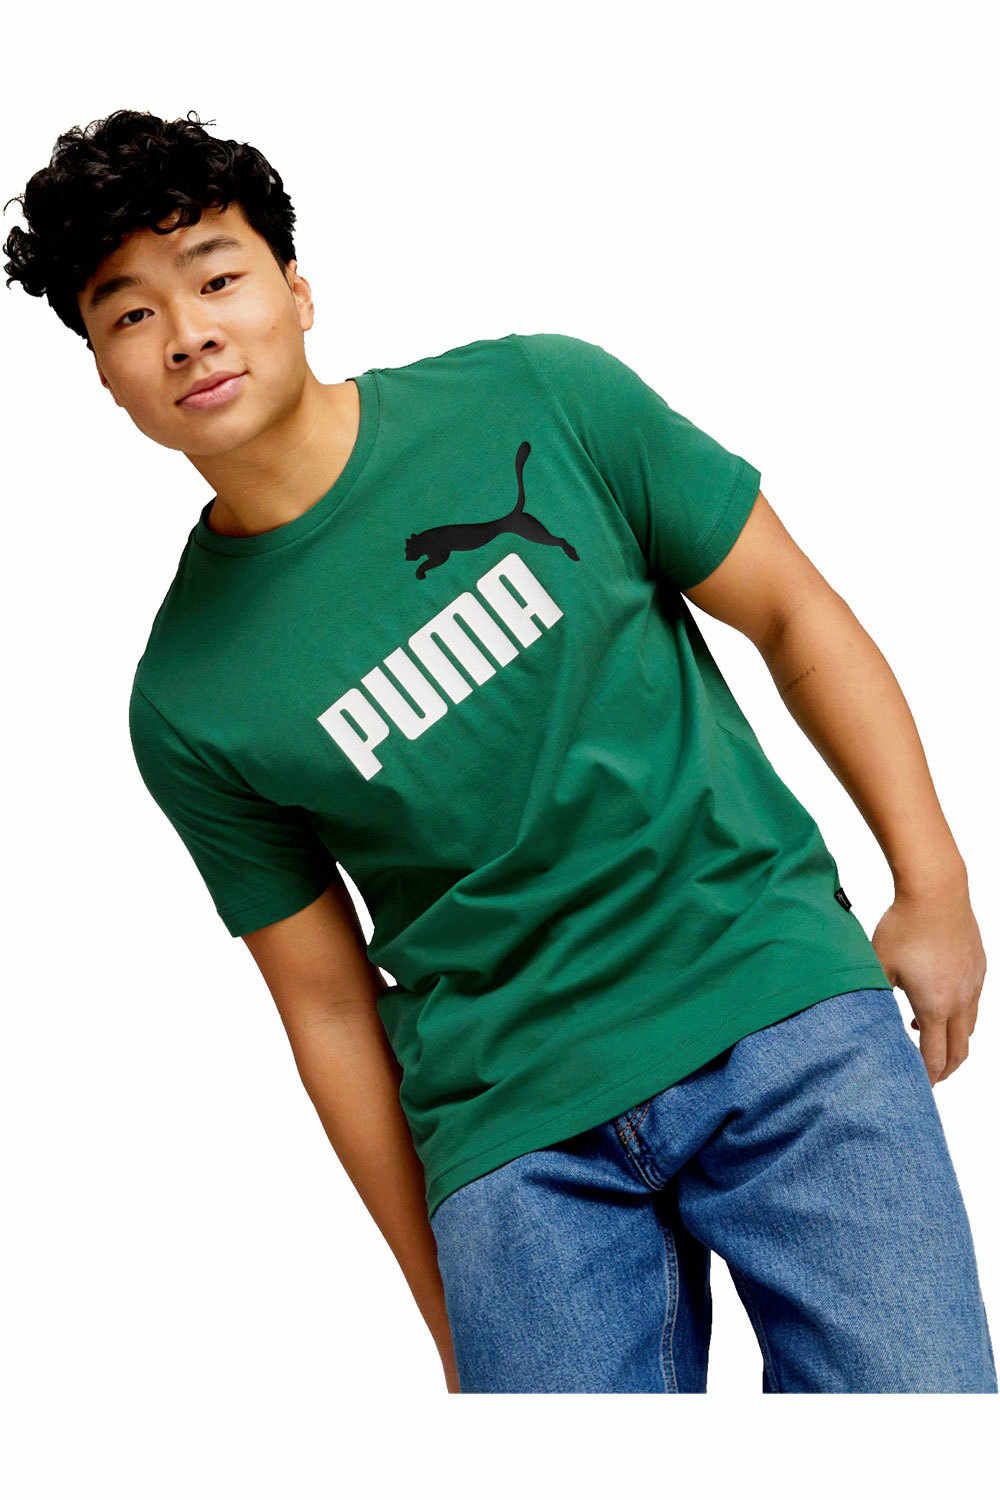 Puma camiseta manga corta hombre ESS+ 2 Col Logo Tee vista frontal